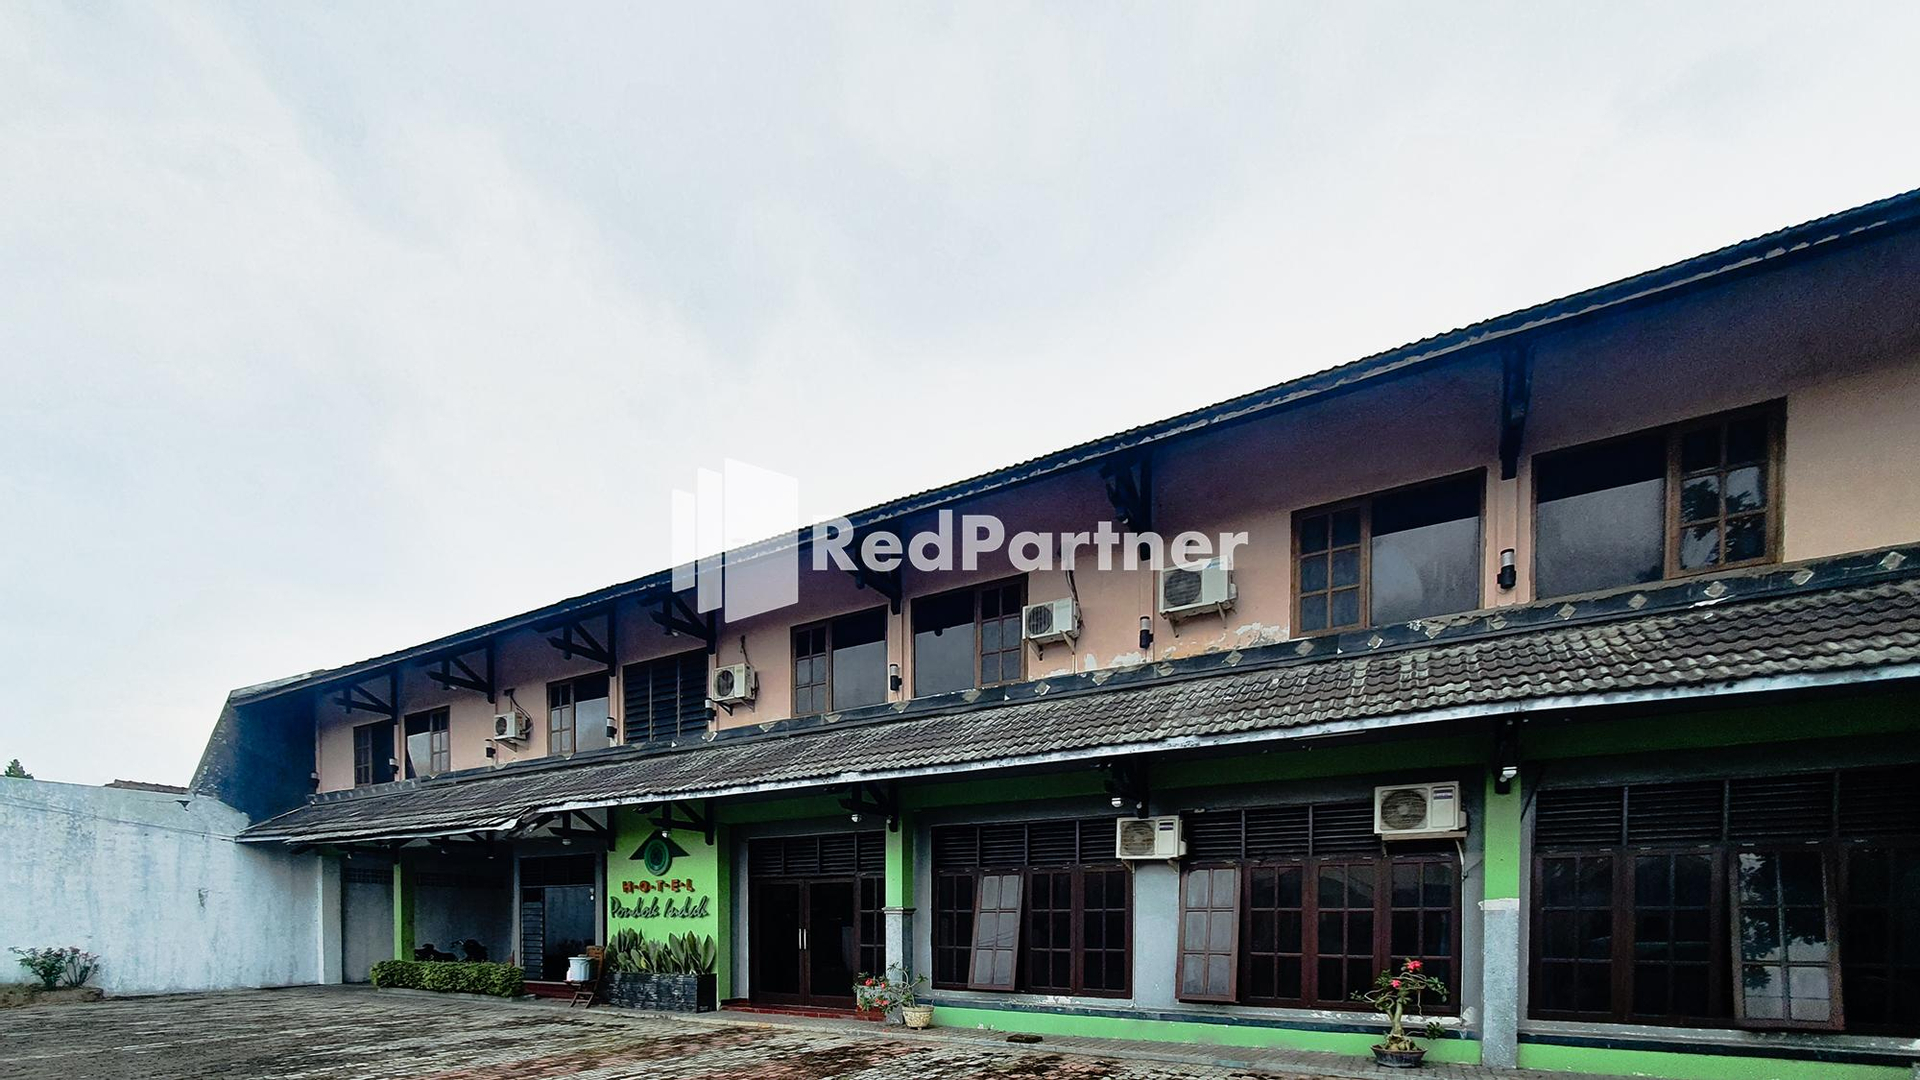 Others 4, Hotel Pondok Indah RedPartner, Madiun